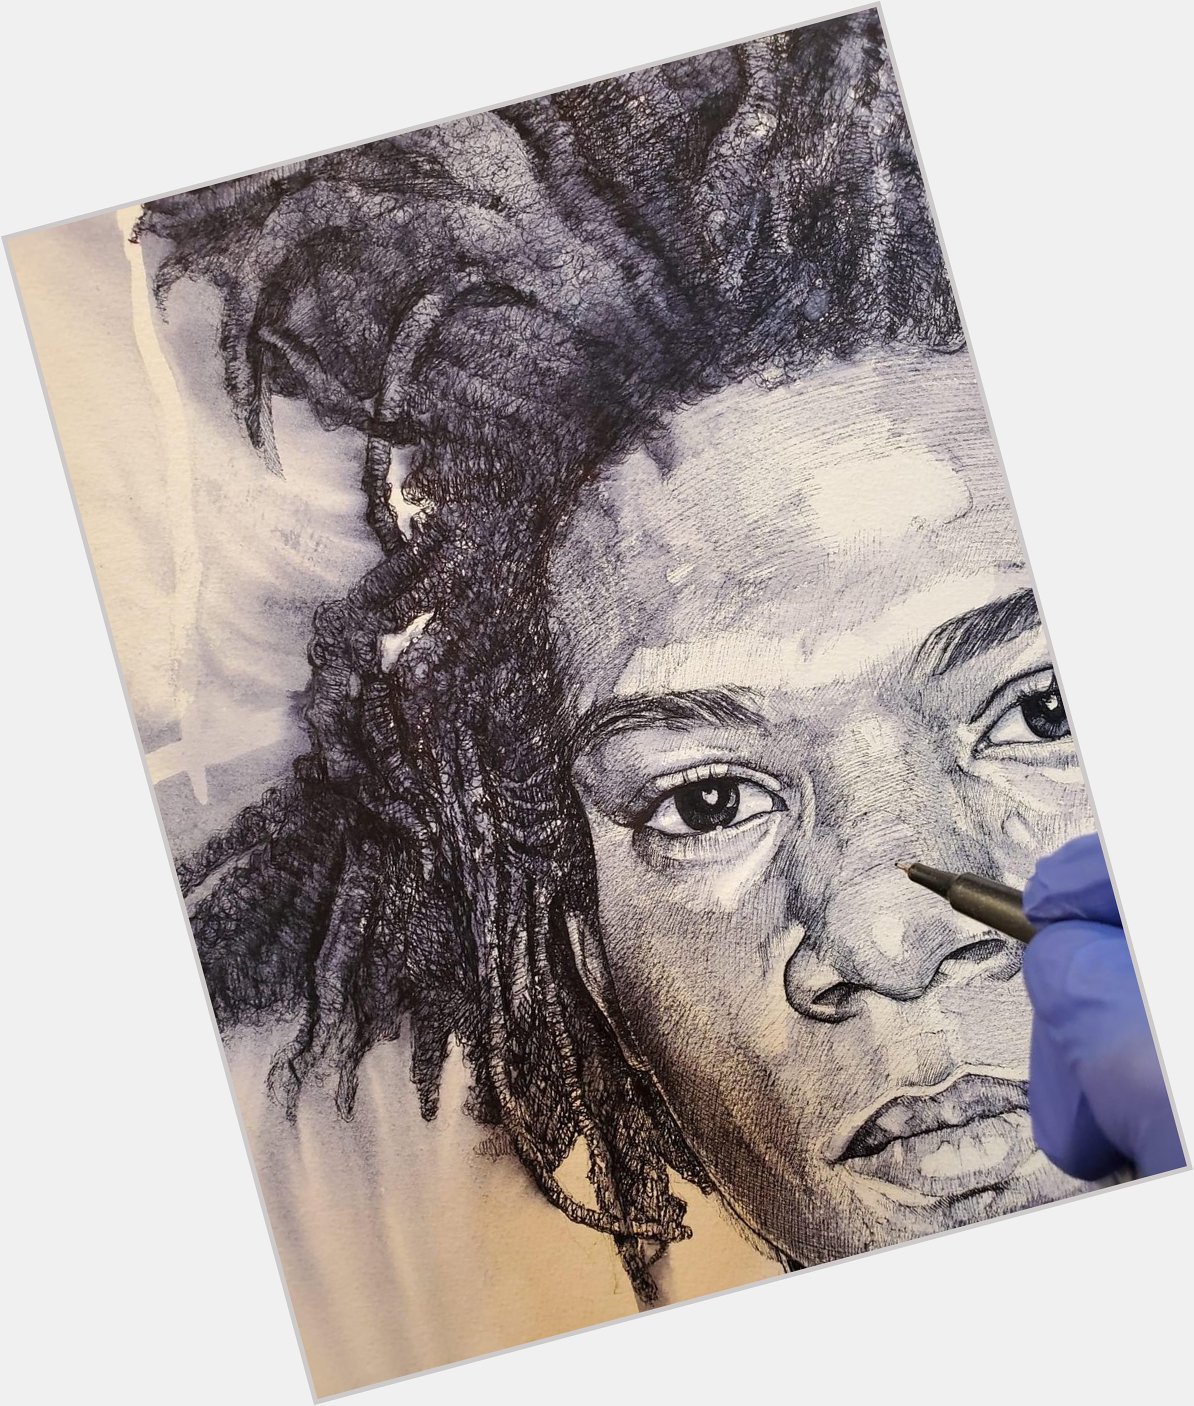 Kevin Wak Williams 

Happy Birthday Jean Michel Basquiat 